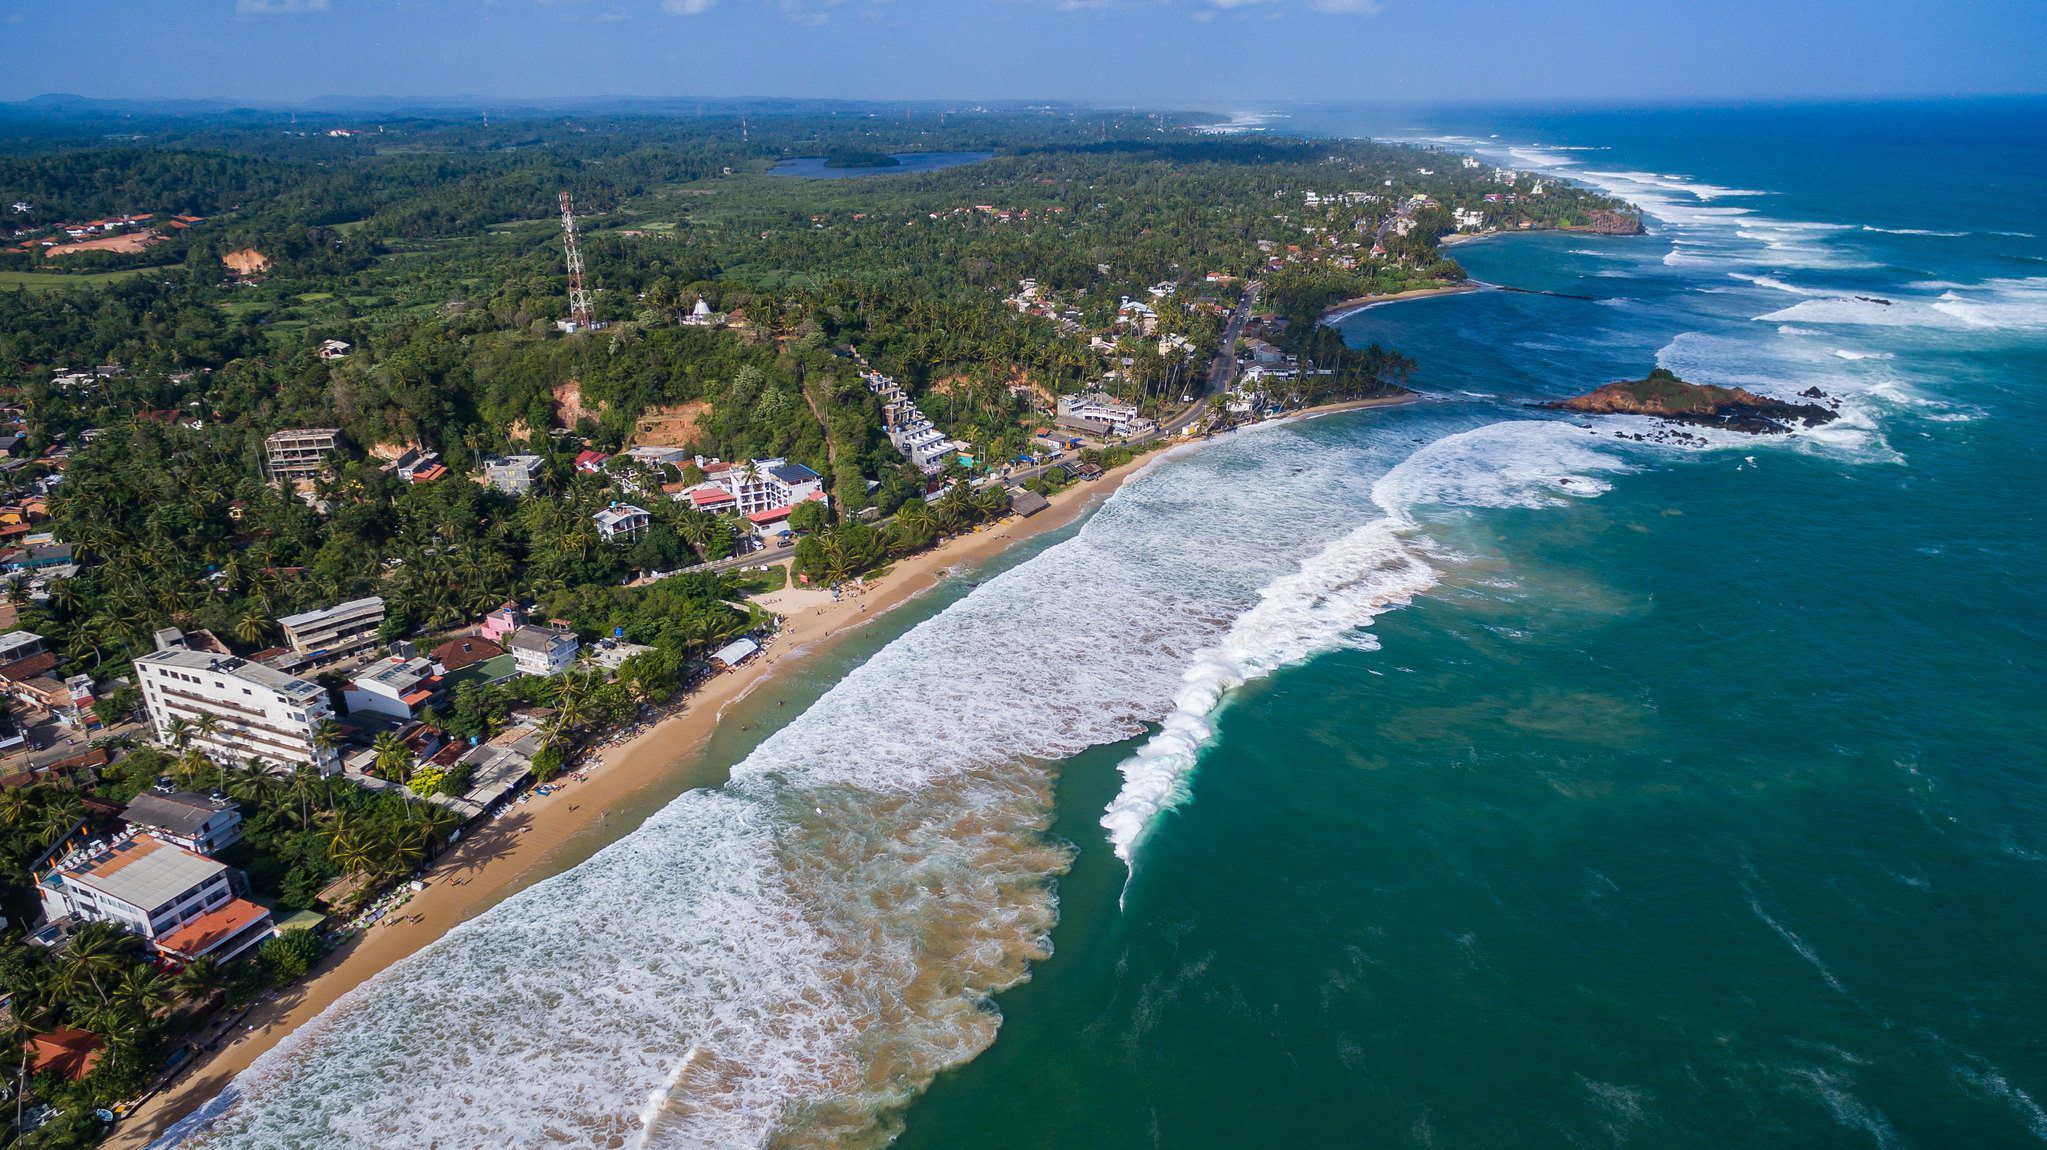 The perfect 6 day Sri Lanka Honeymoon itinerary to rejuvenate